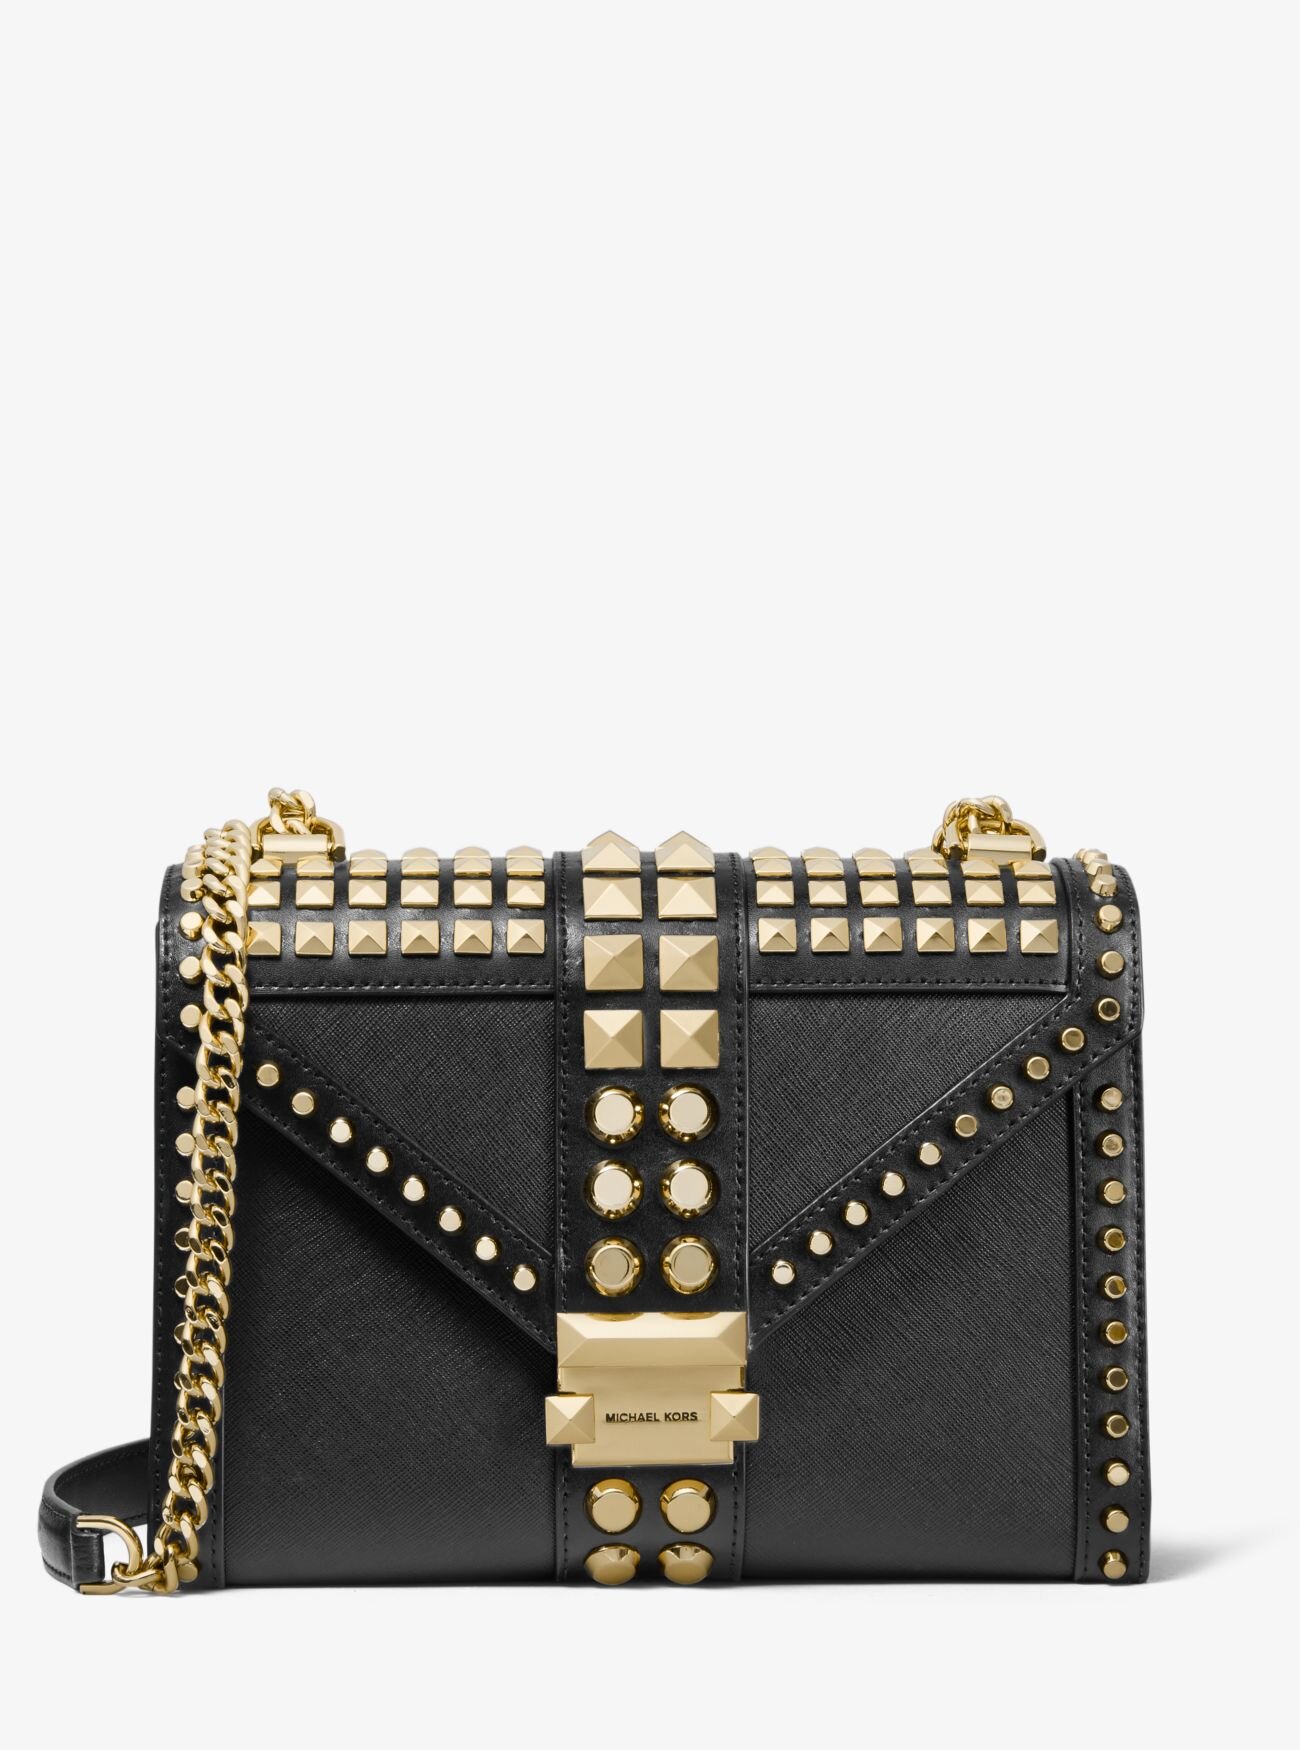 black studded michael kors purse